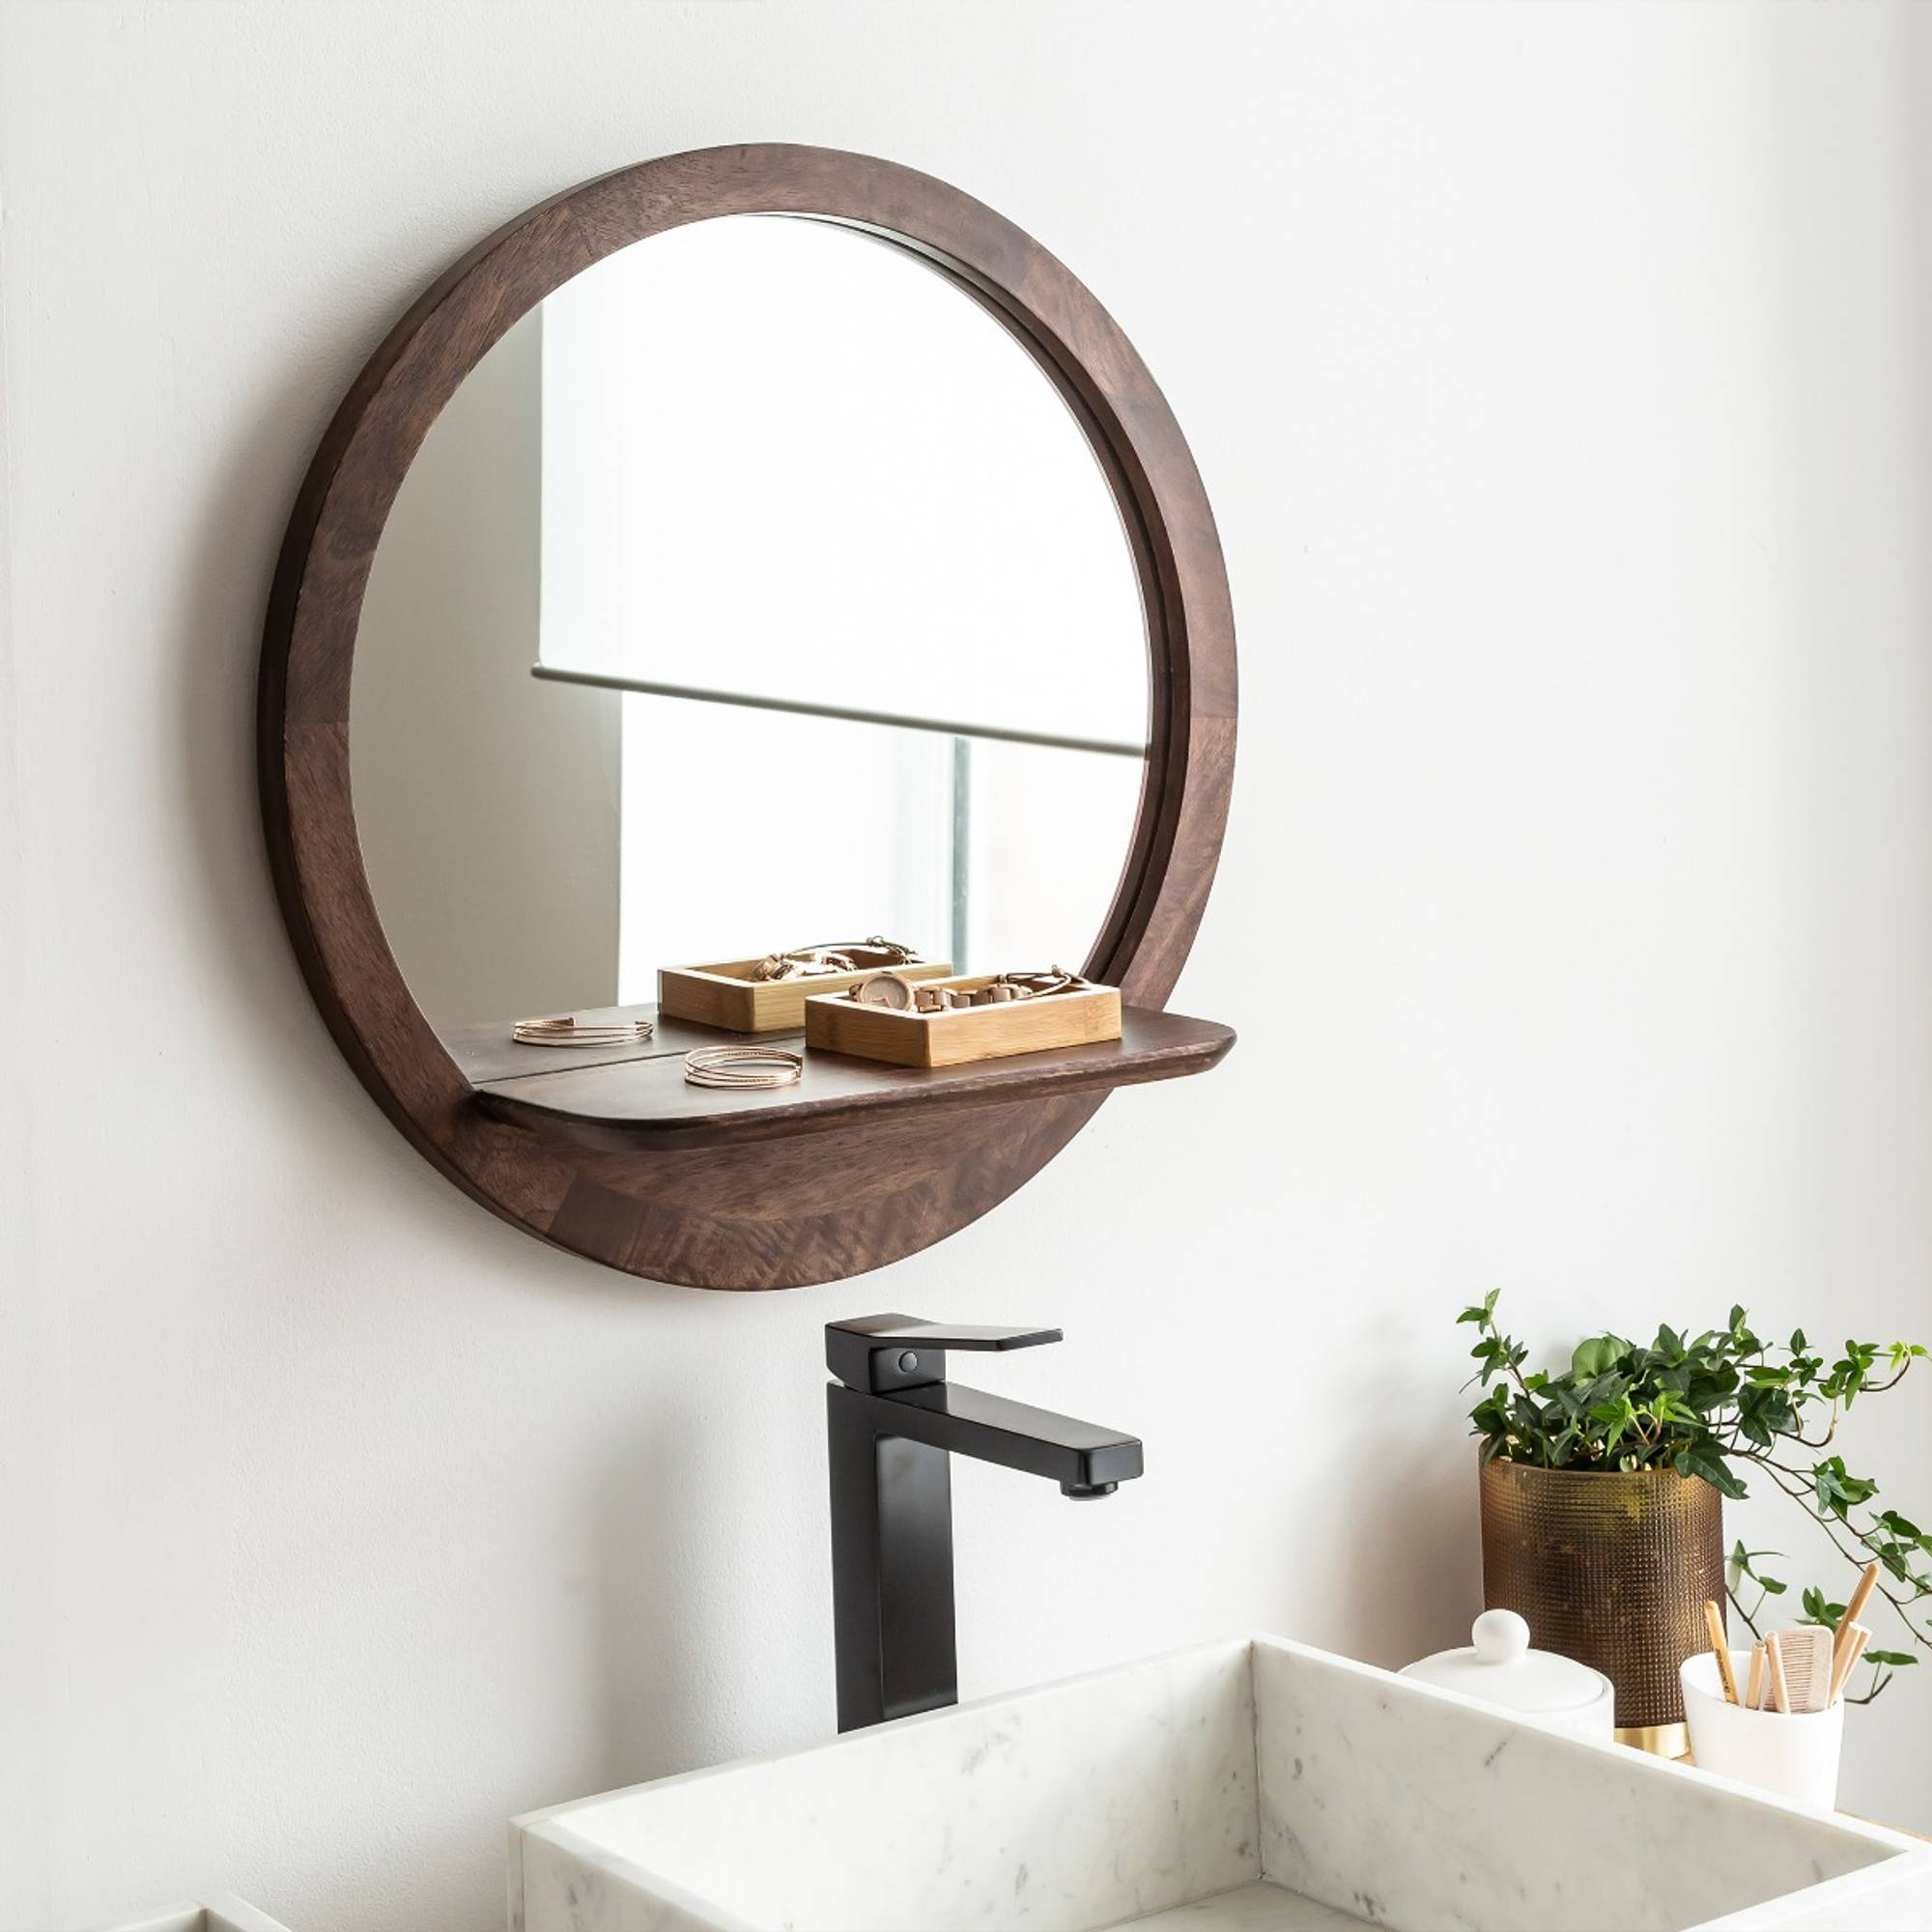 Miroir rond avec étagère en bois Marley